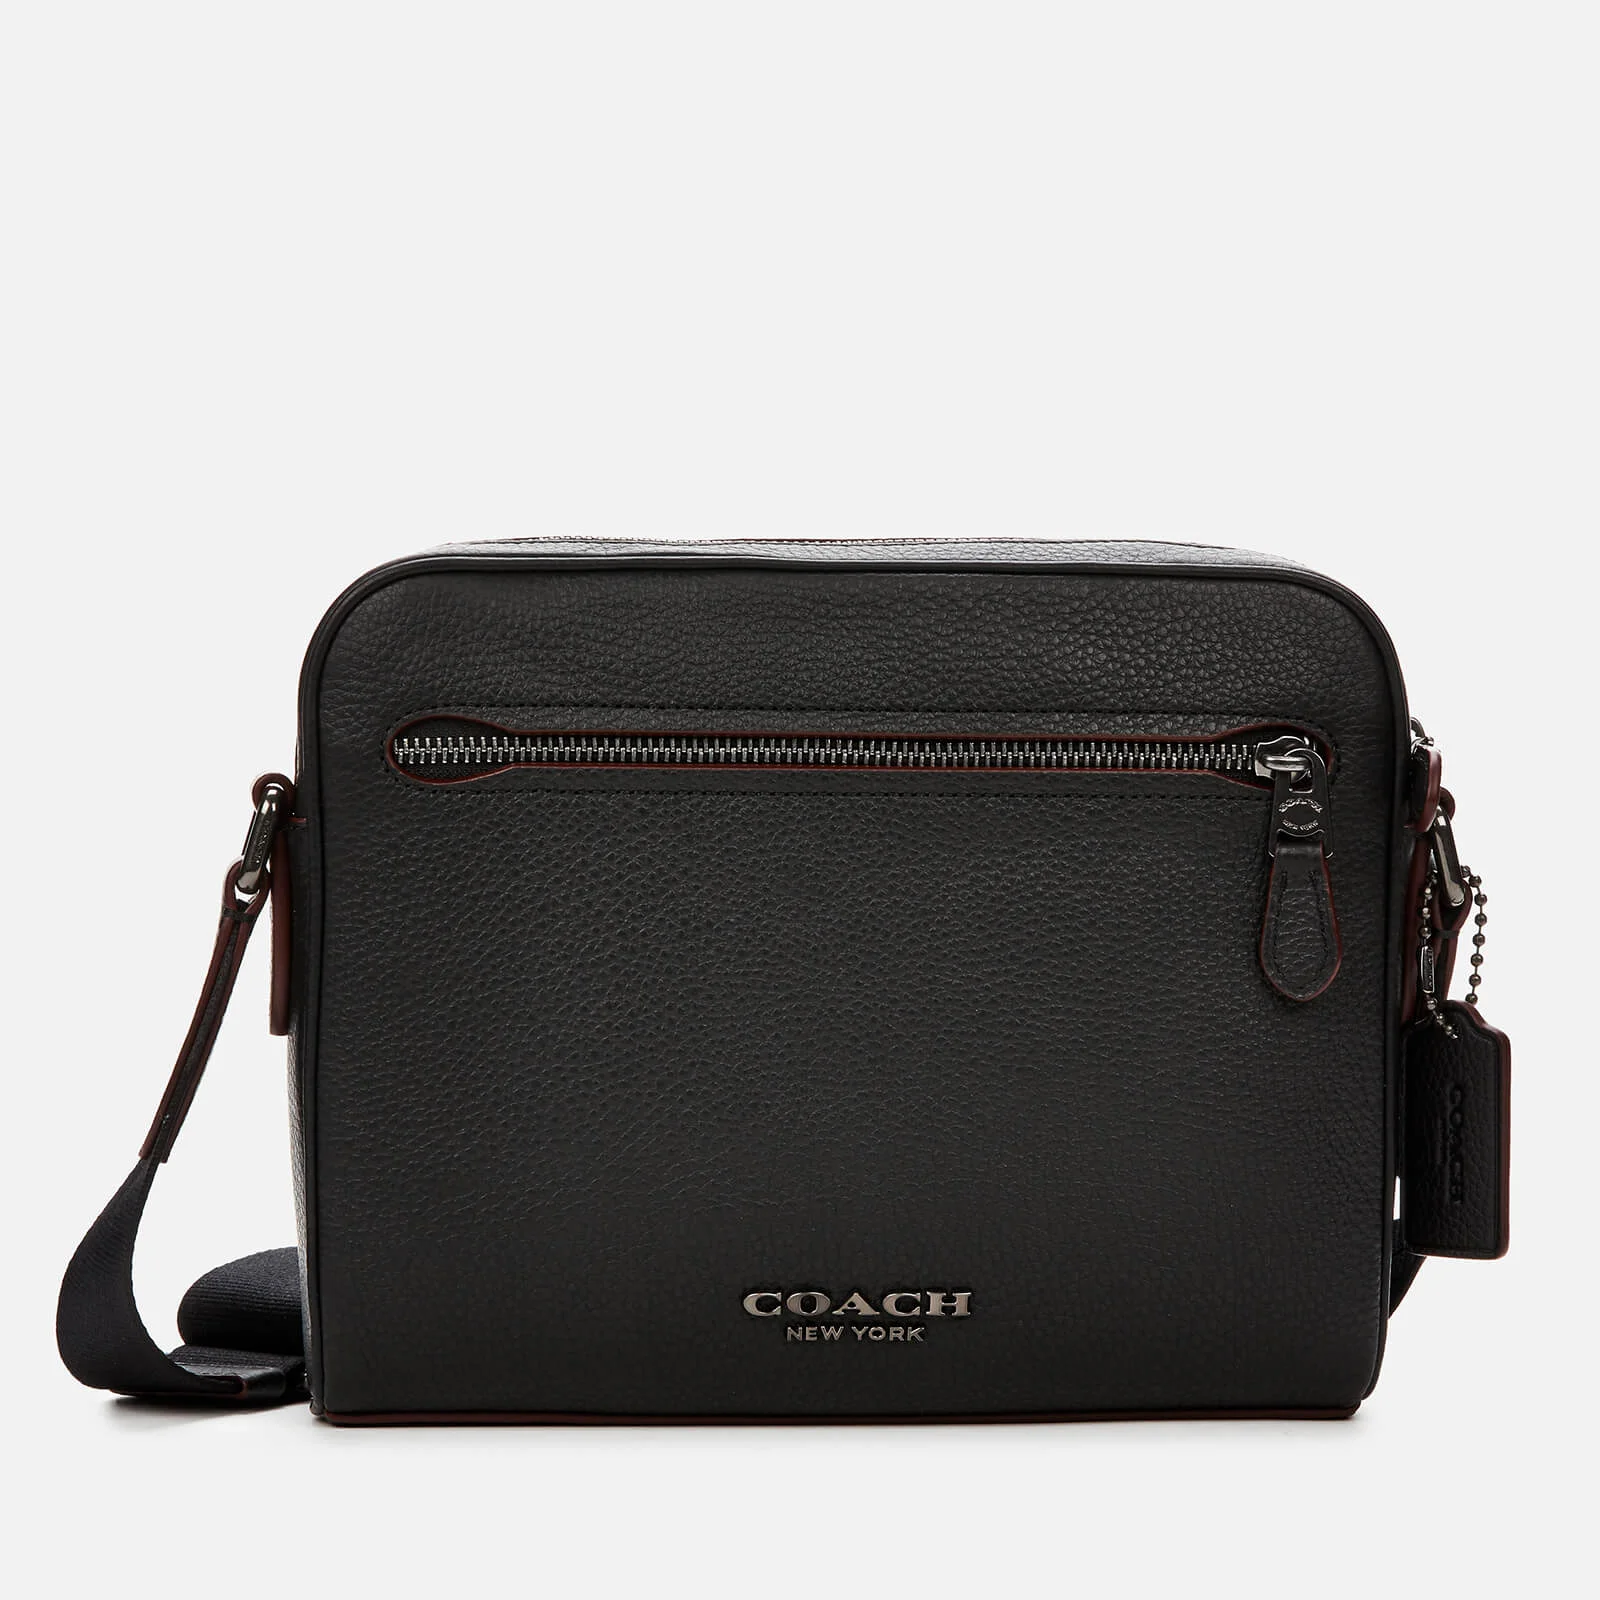 Coach Men's Metropolitan Soft Camera Bag - Black Image 1